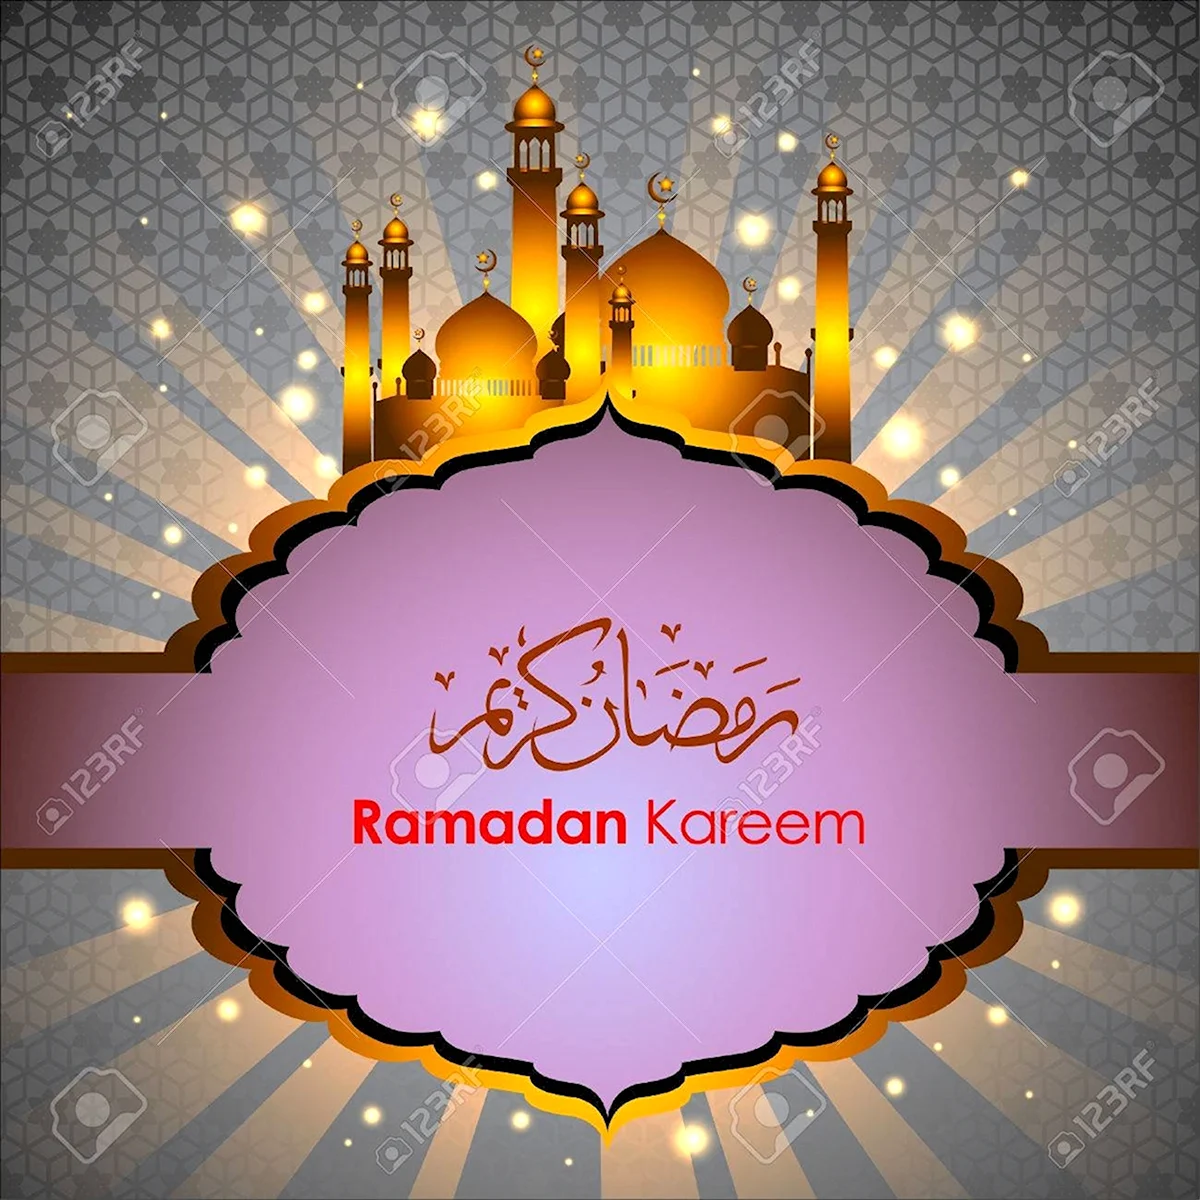 Открытки с Рамаданом на арабском